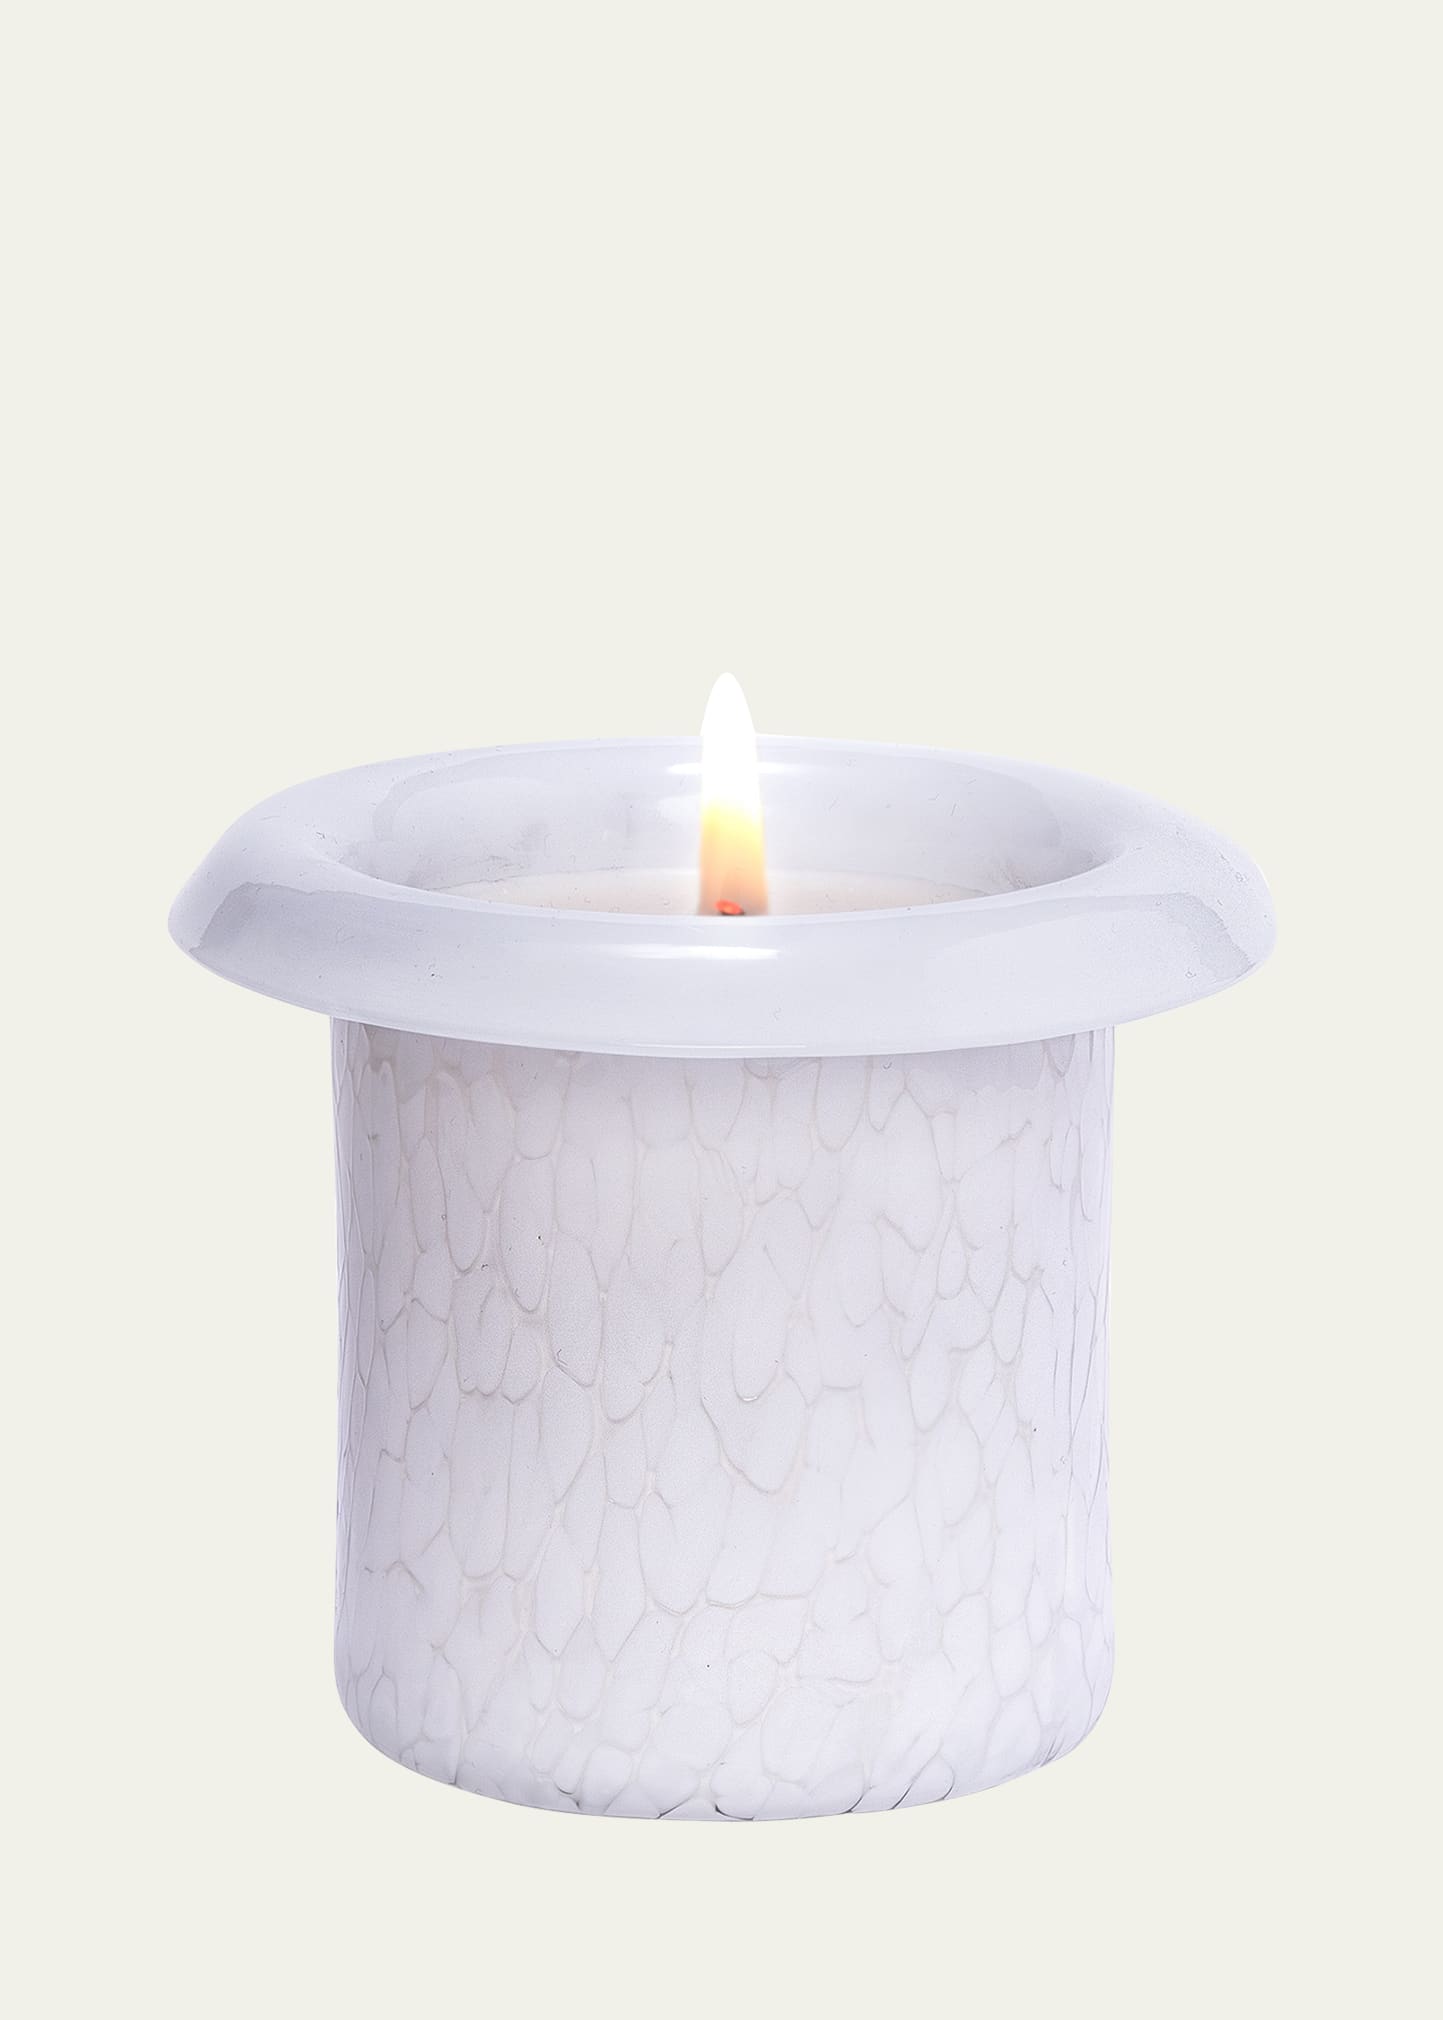 Aina Kari 600 11.2 Oz. Murano Glass Candle In White Crackle